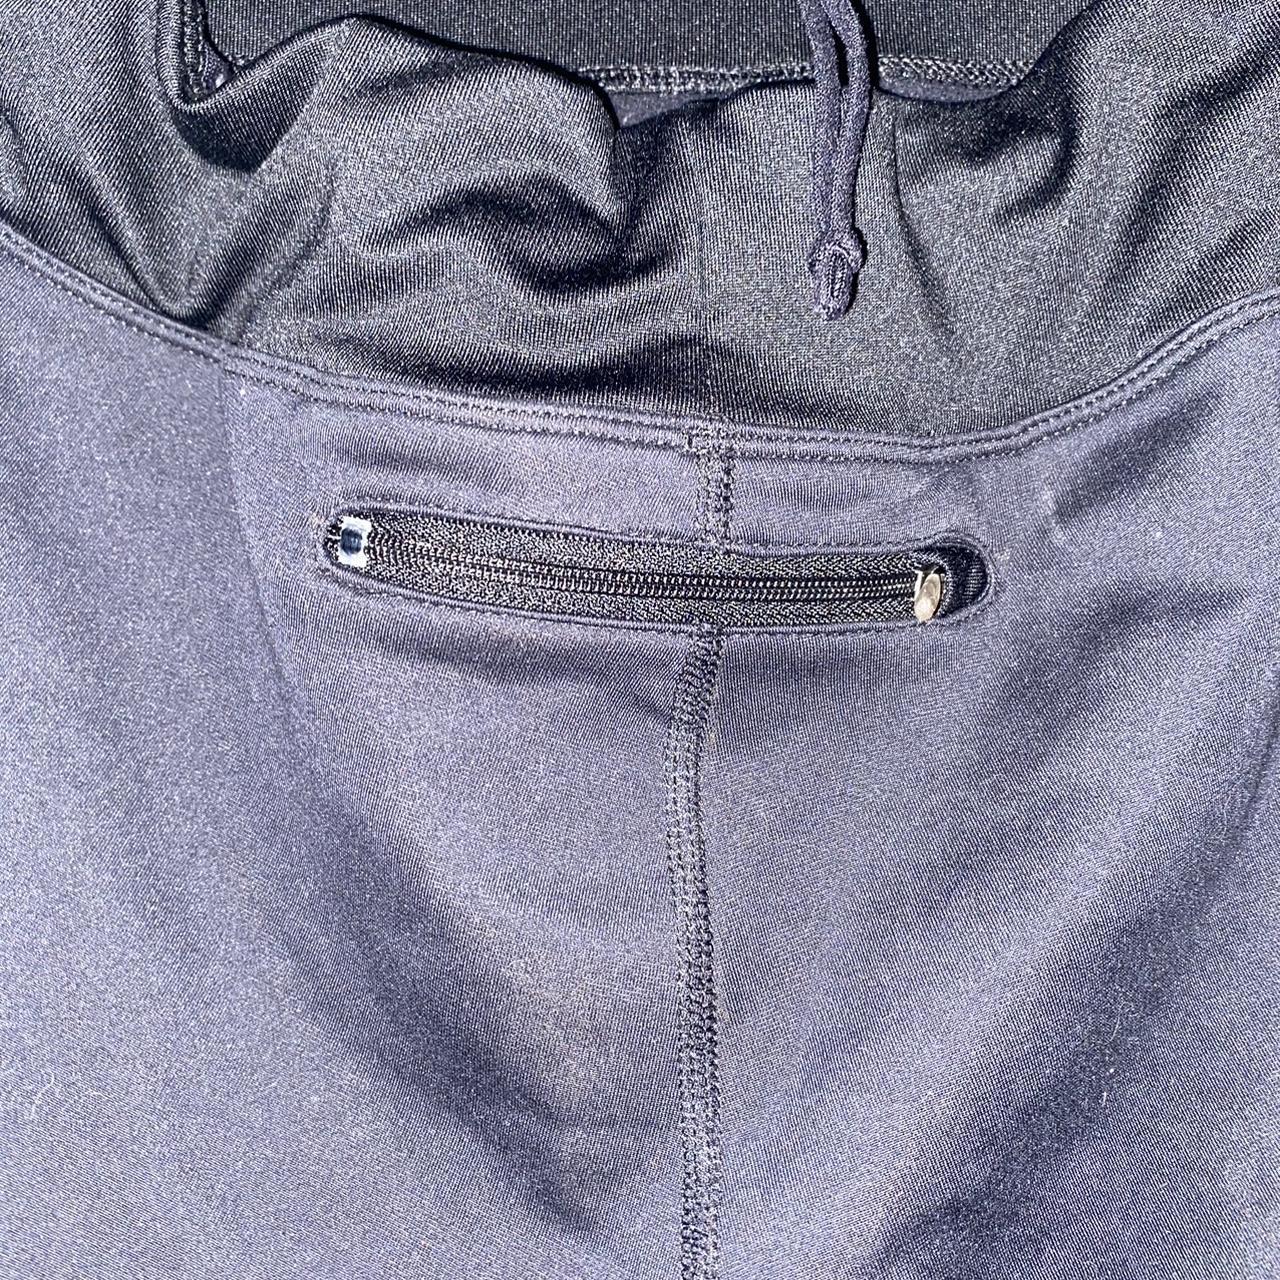 Nike flare yoga pants size large. Worn a few times - Depop